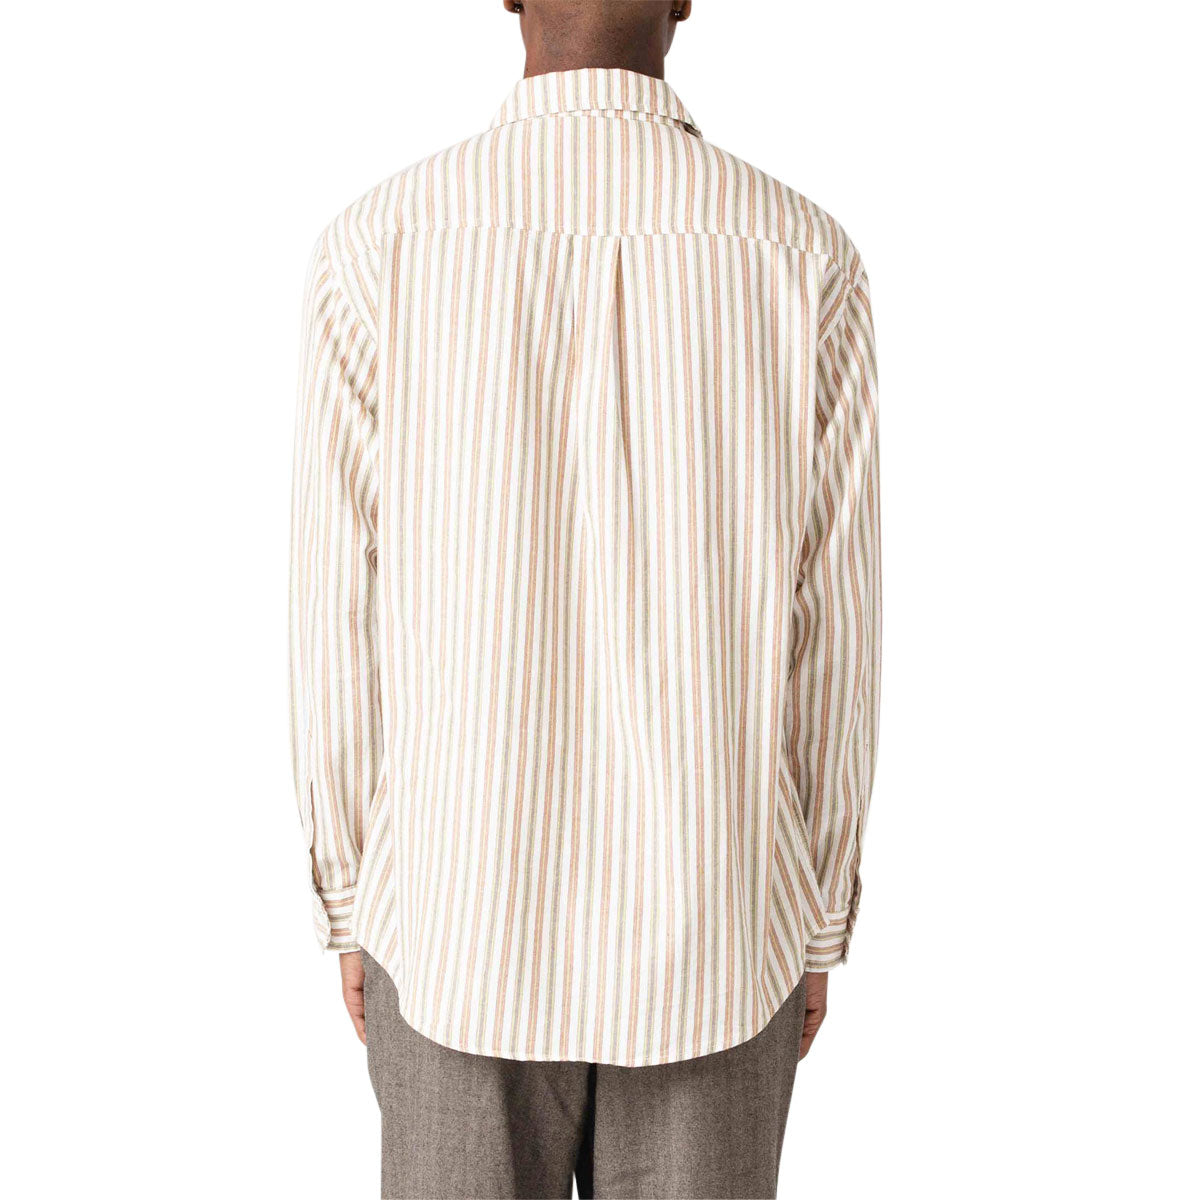 Former Reynolds Striped Long Sleeve Shirt - Ochre image 2